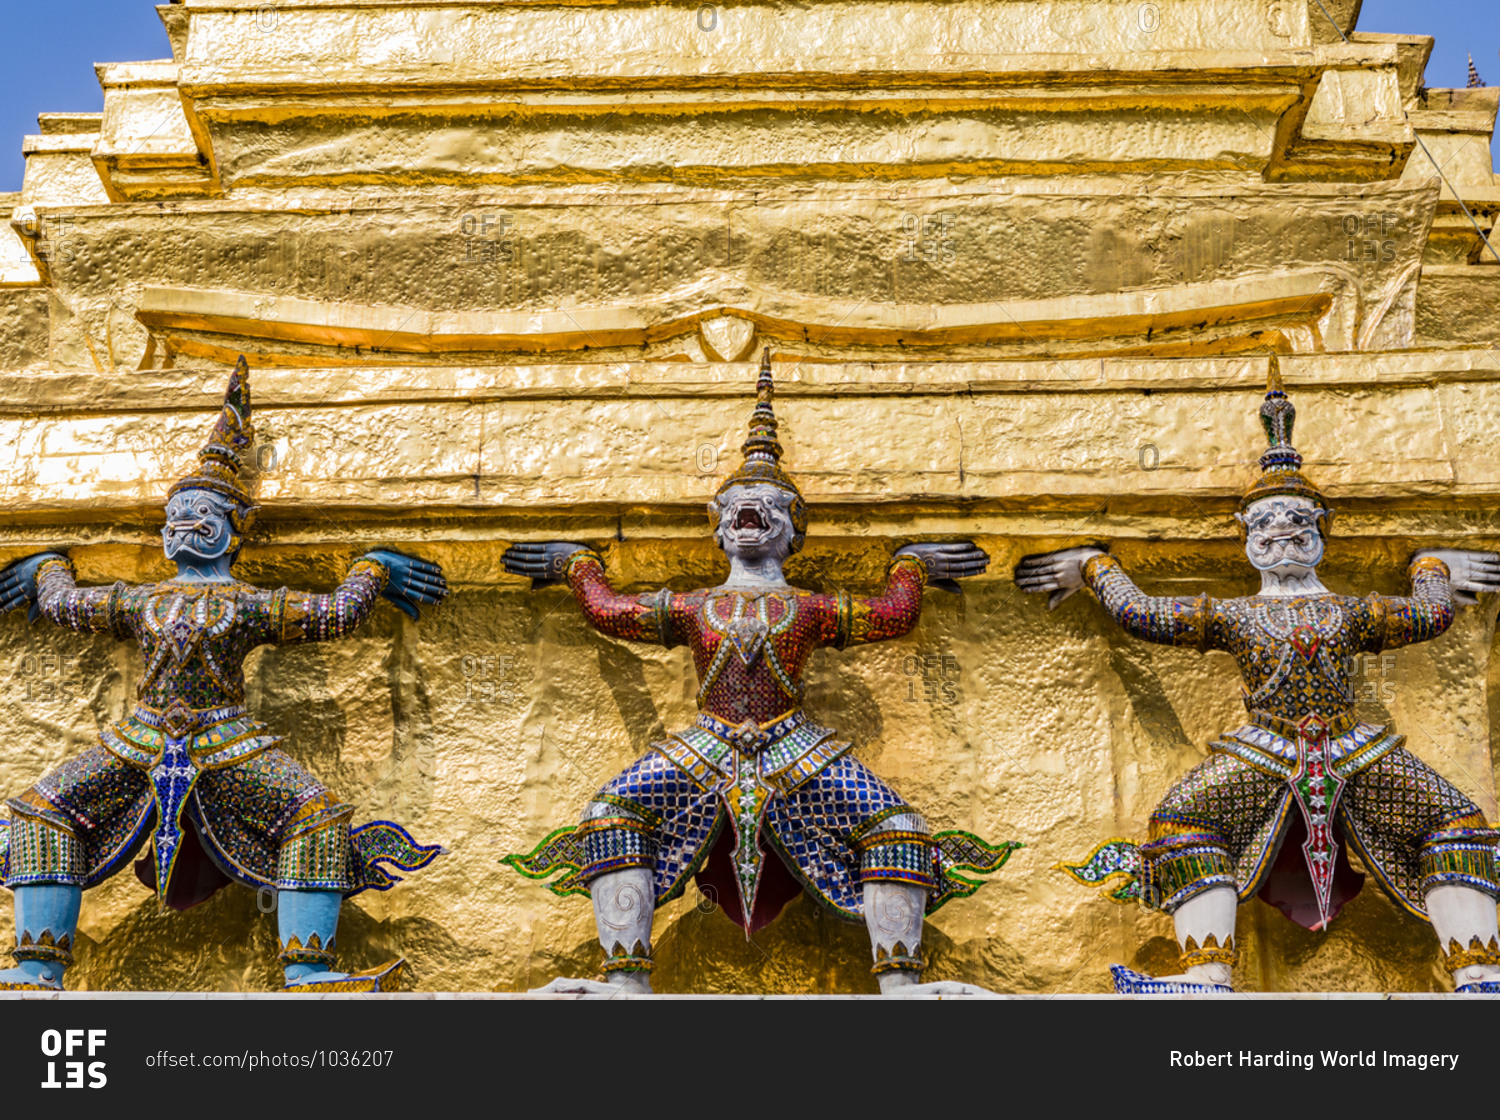 Wat Phra Kaew, The Grand Palace, Bangkok, Thailand, Southeast Asia, Asia